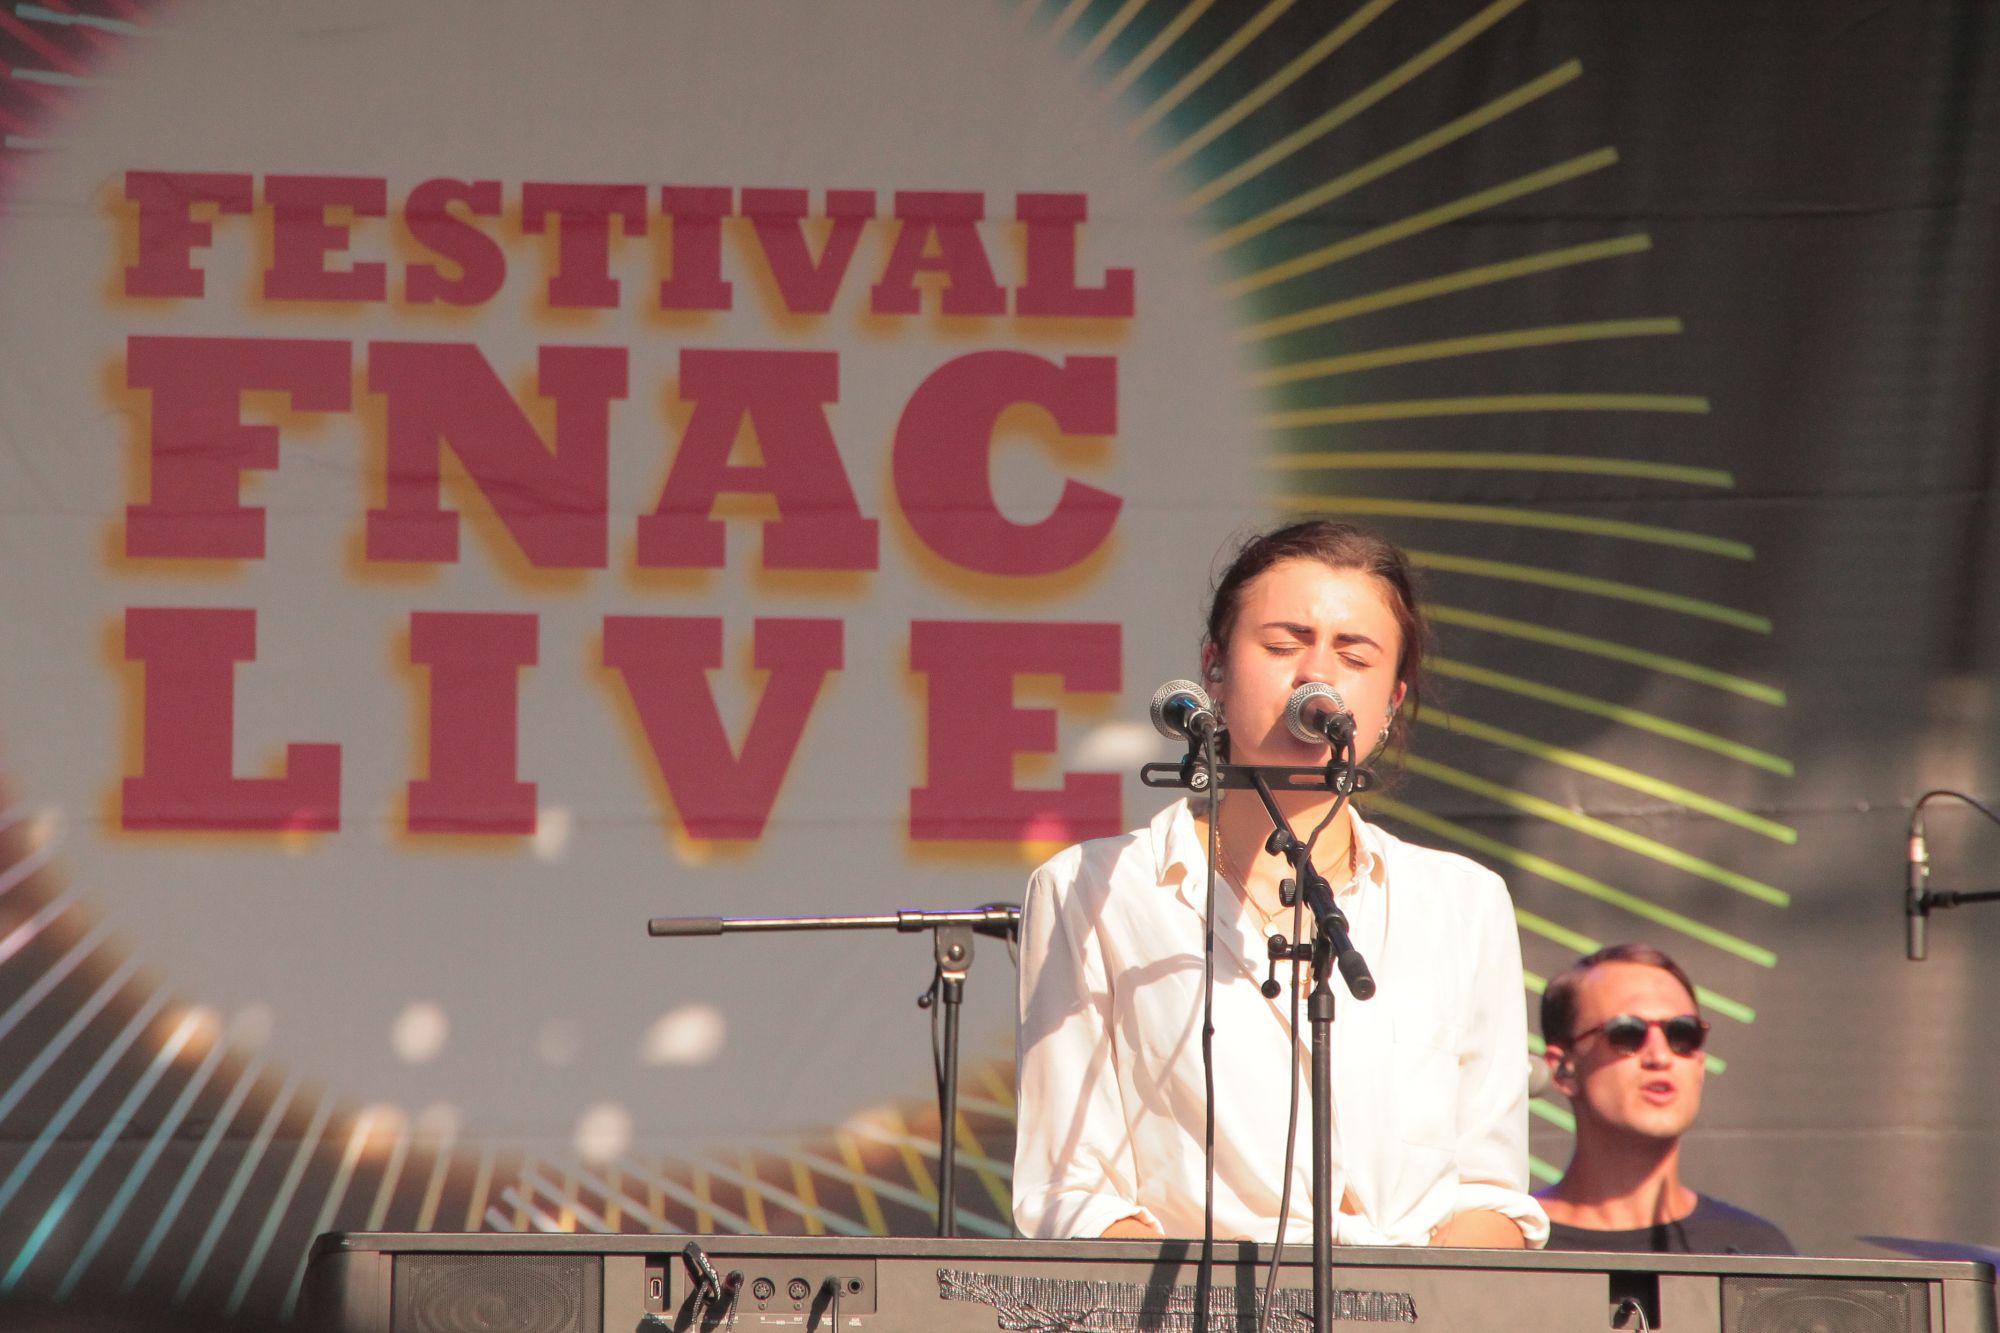 Festival Fnac Live - Arthur Béatrice